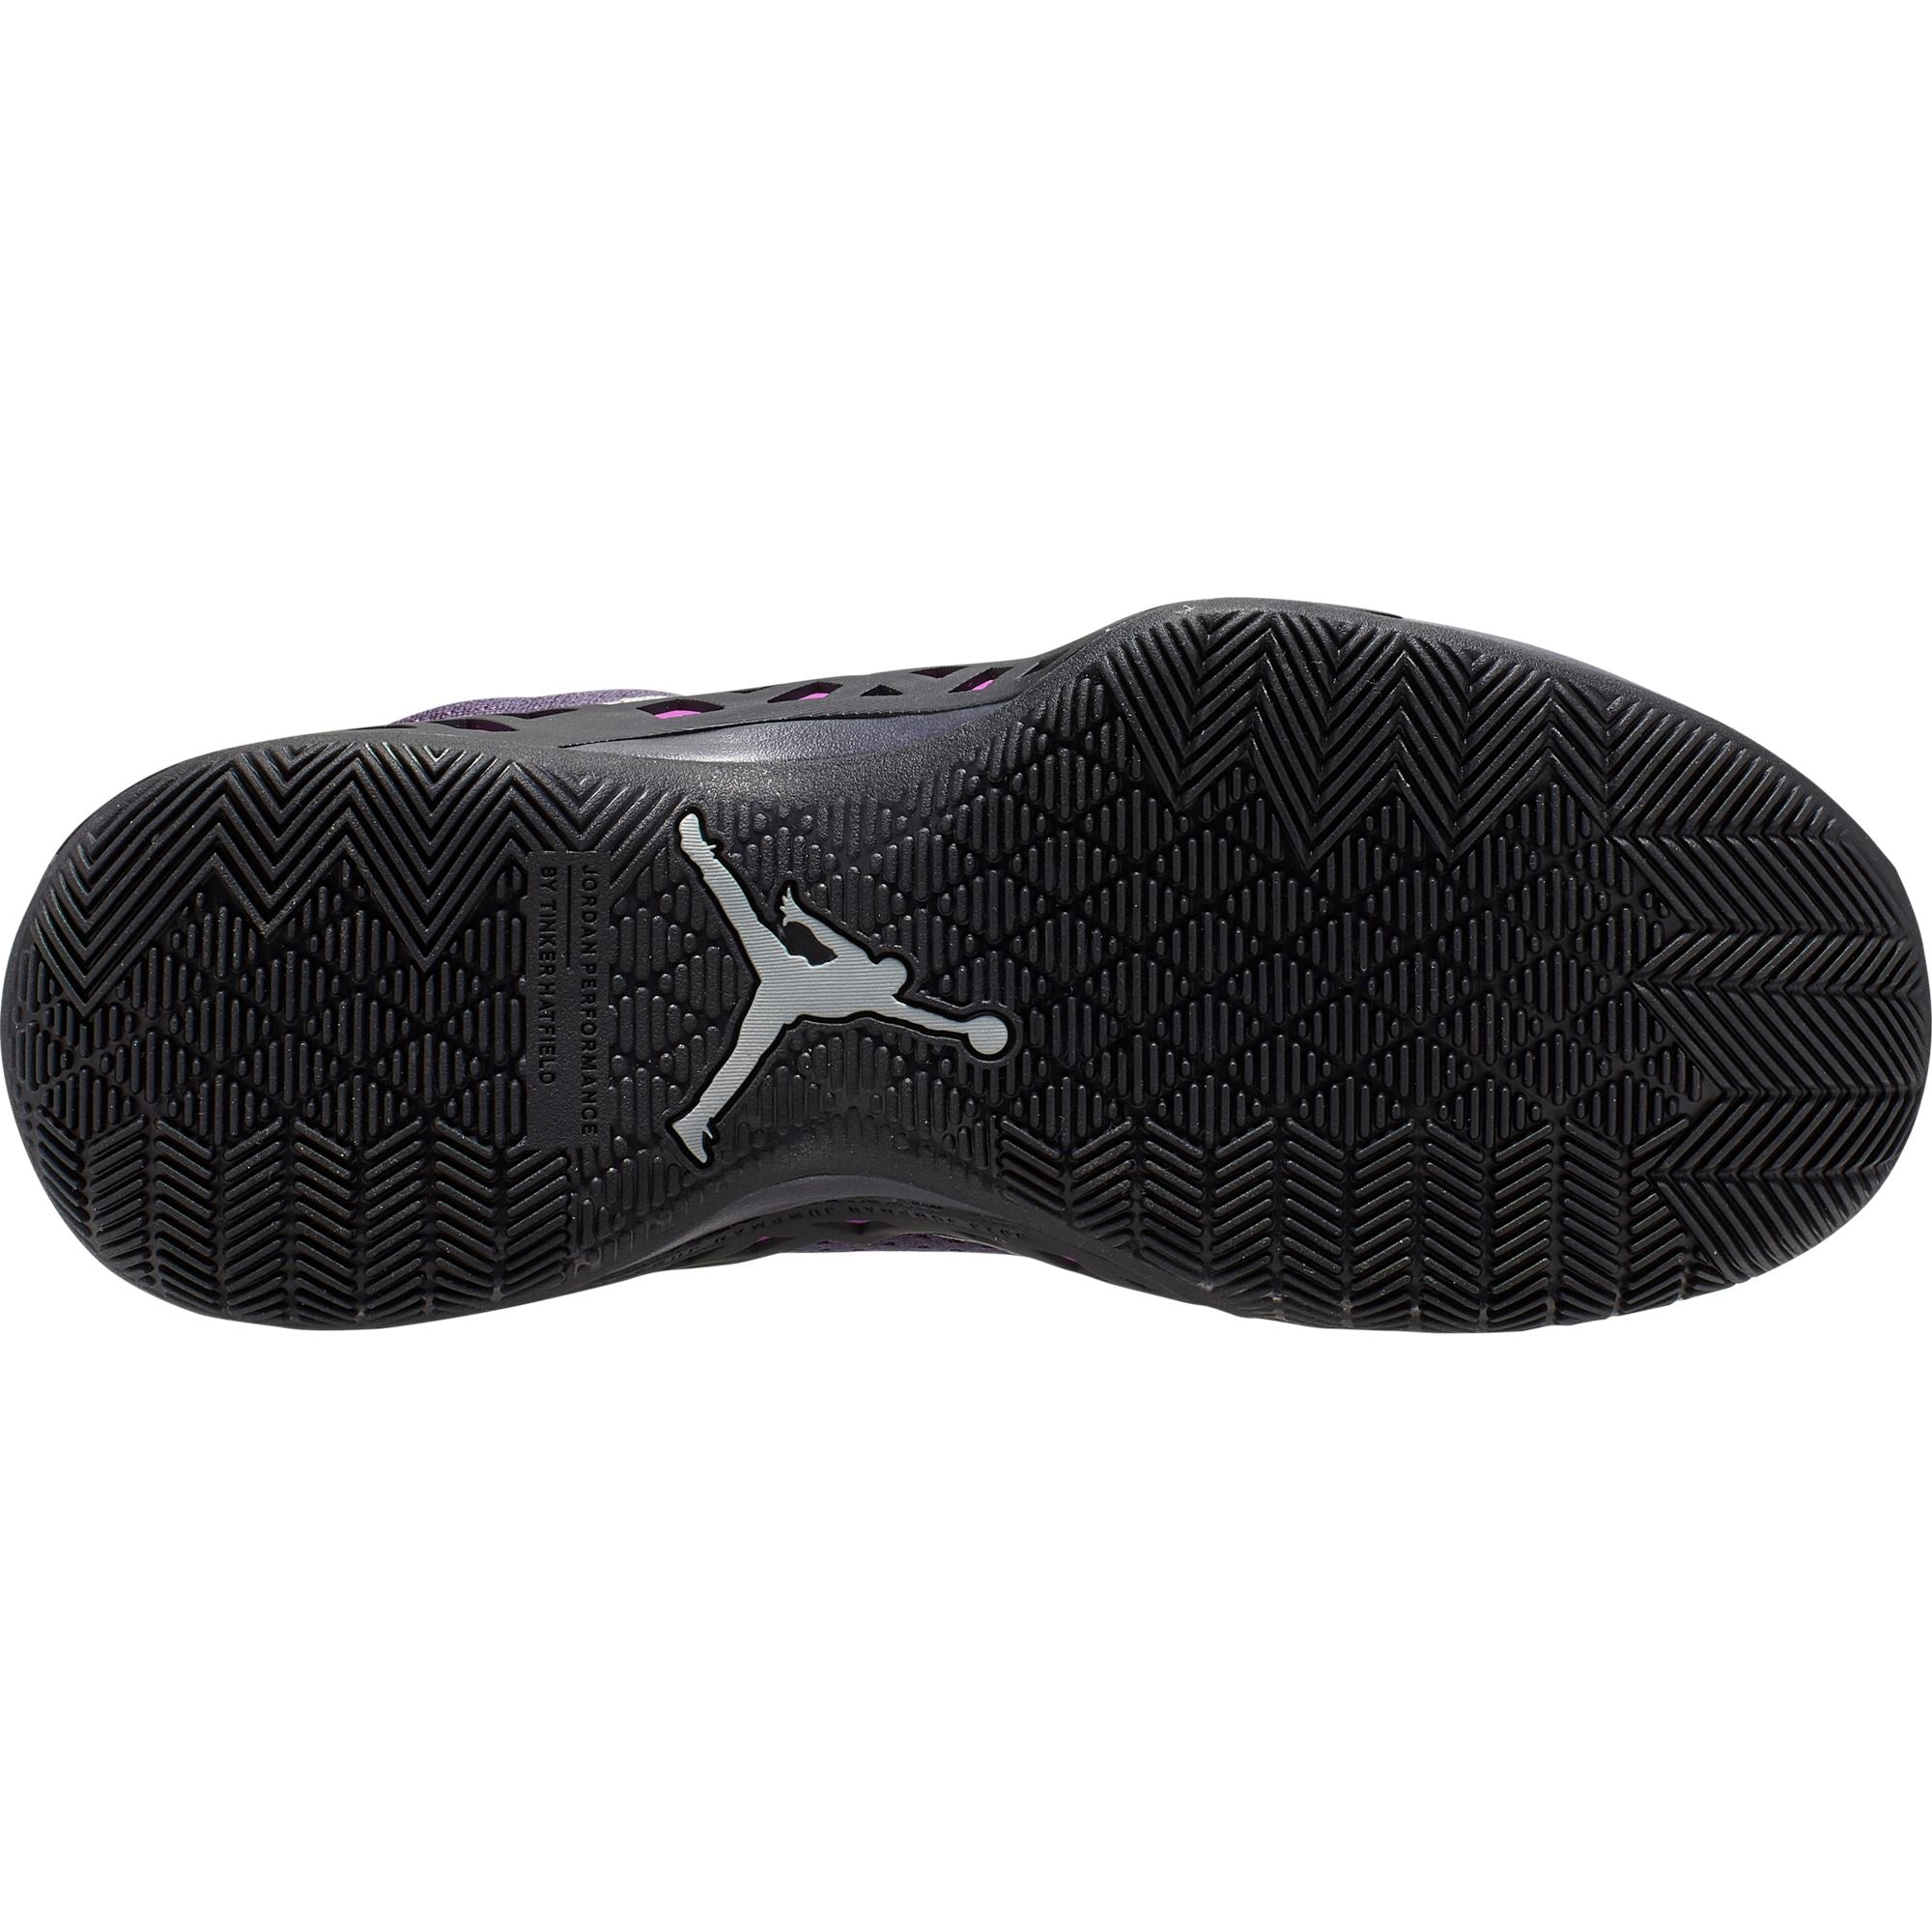 Nike Jordan Jumpman Diamond Mid Basketball Boot/Shoe - Gridiron/Metallic Silver/Black